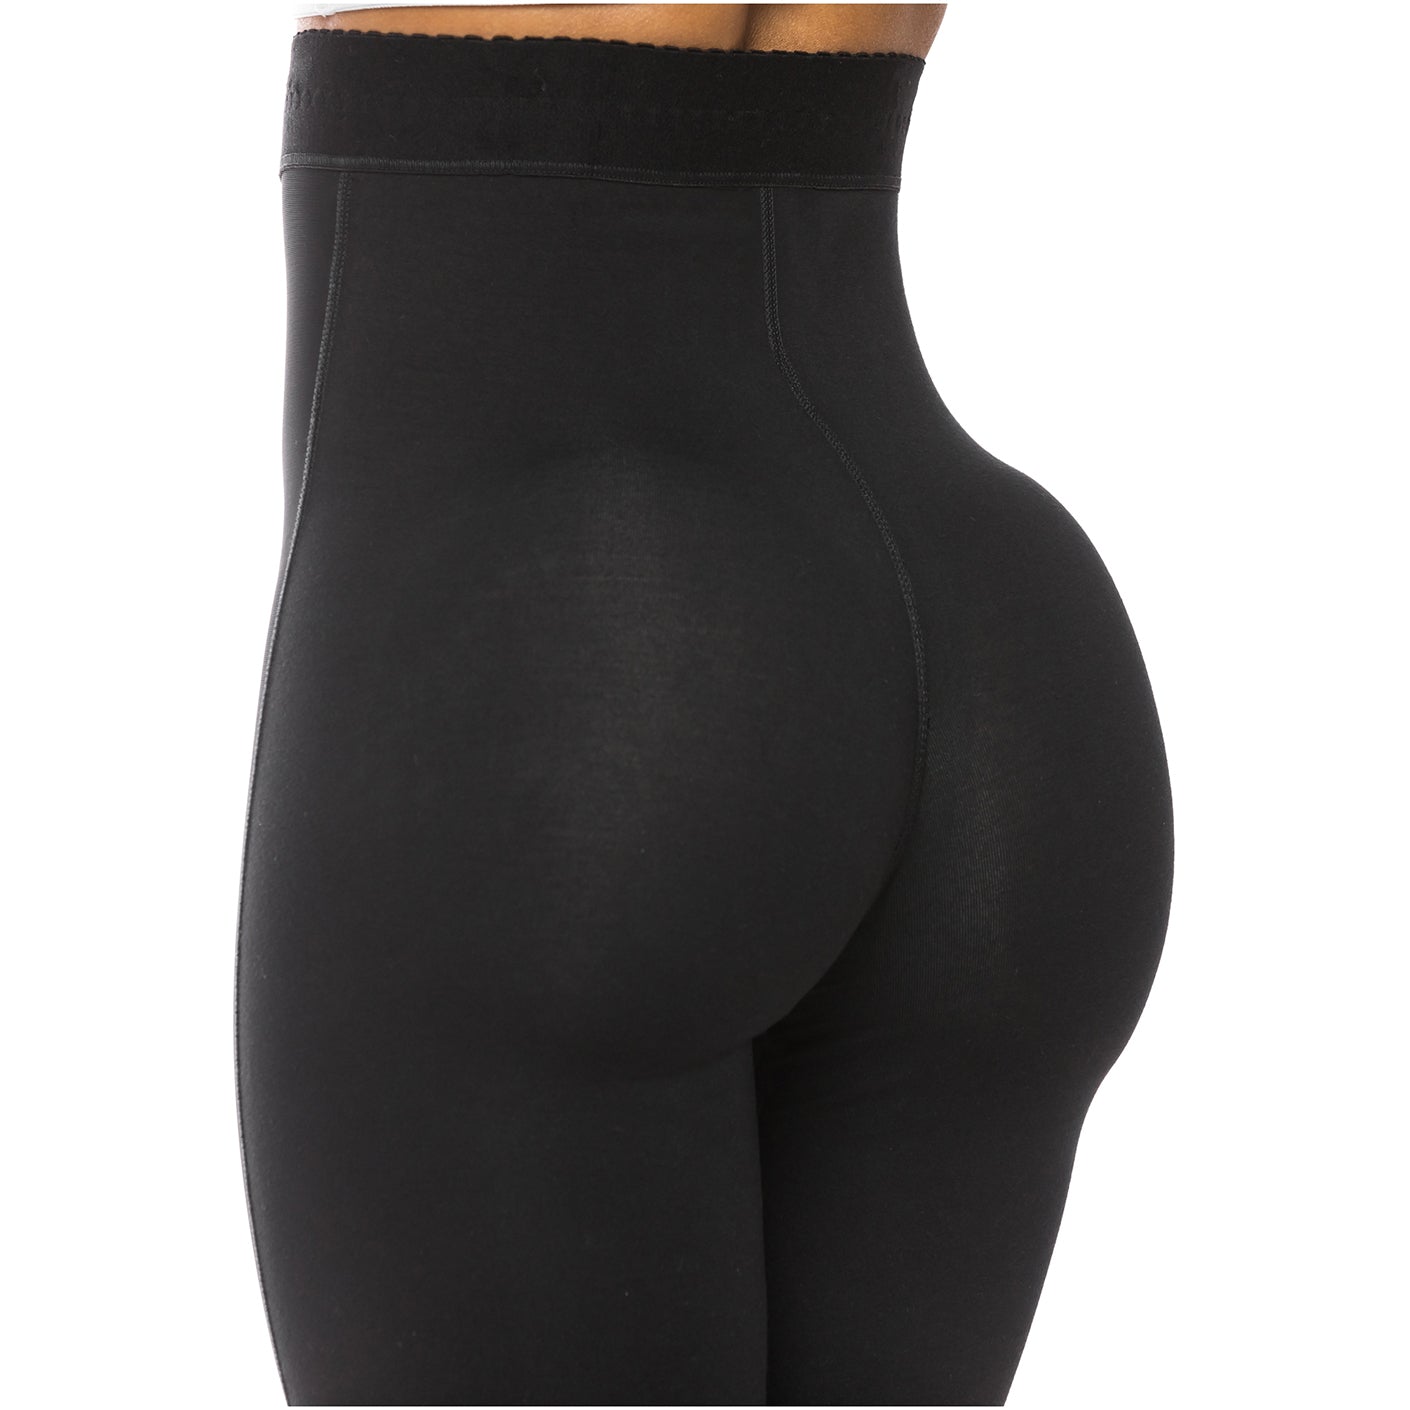 MYD Faja Colombiana Extra High Waist Butt Lifter Shapewear Compression  Girdle Shorts for Woman Faja Levanta Cola Black L 